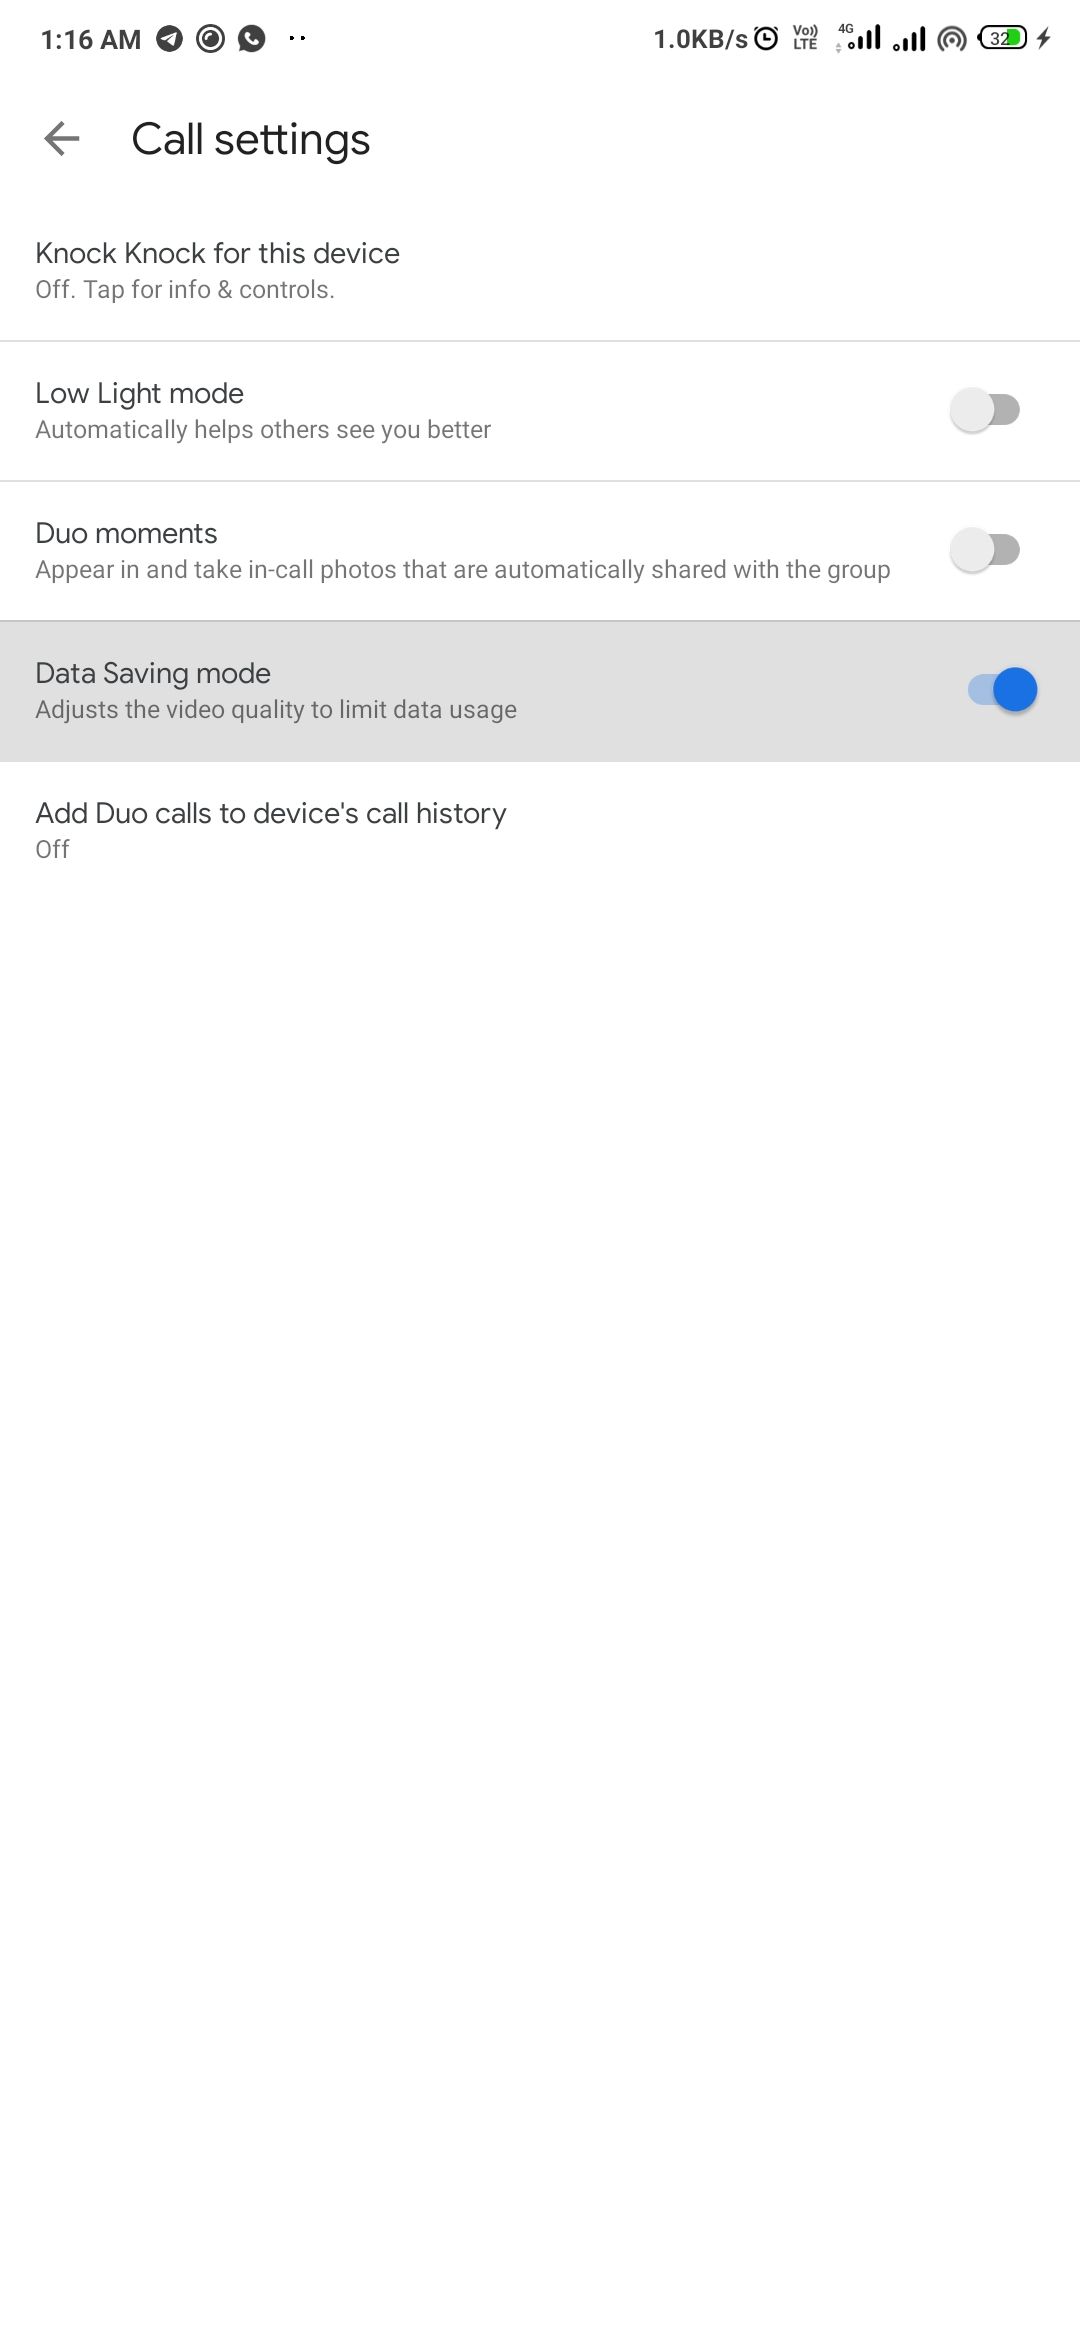 data saving mode in duo